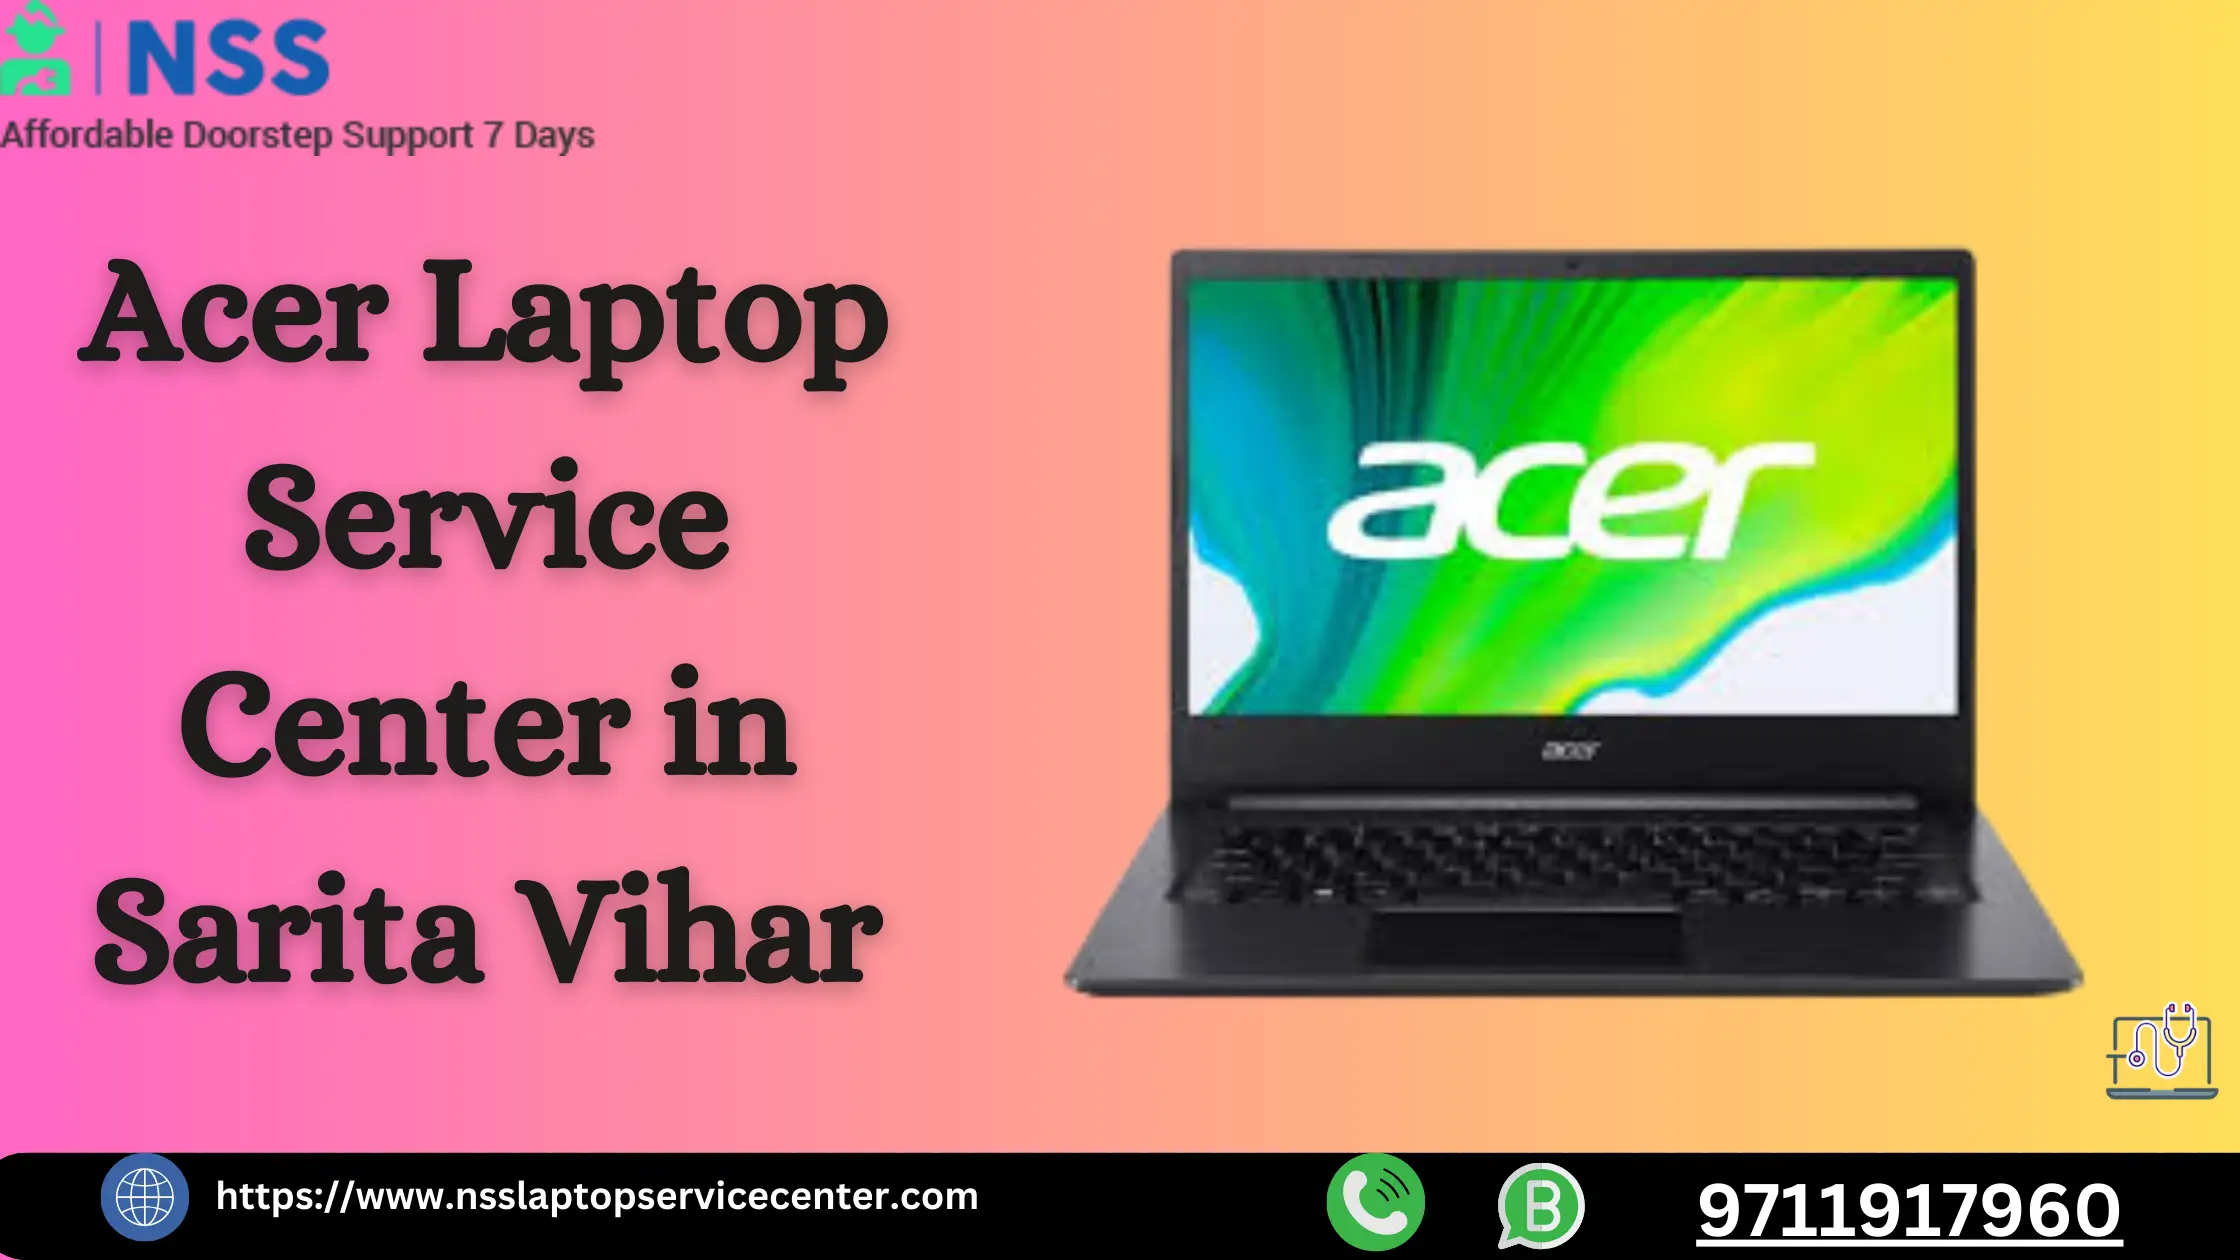 Acer Laptop Service Center in Sarita Vihar Near Delhi